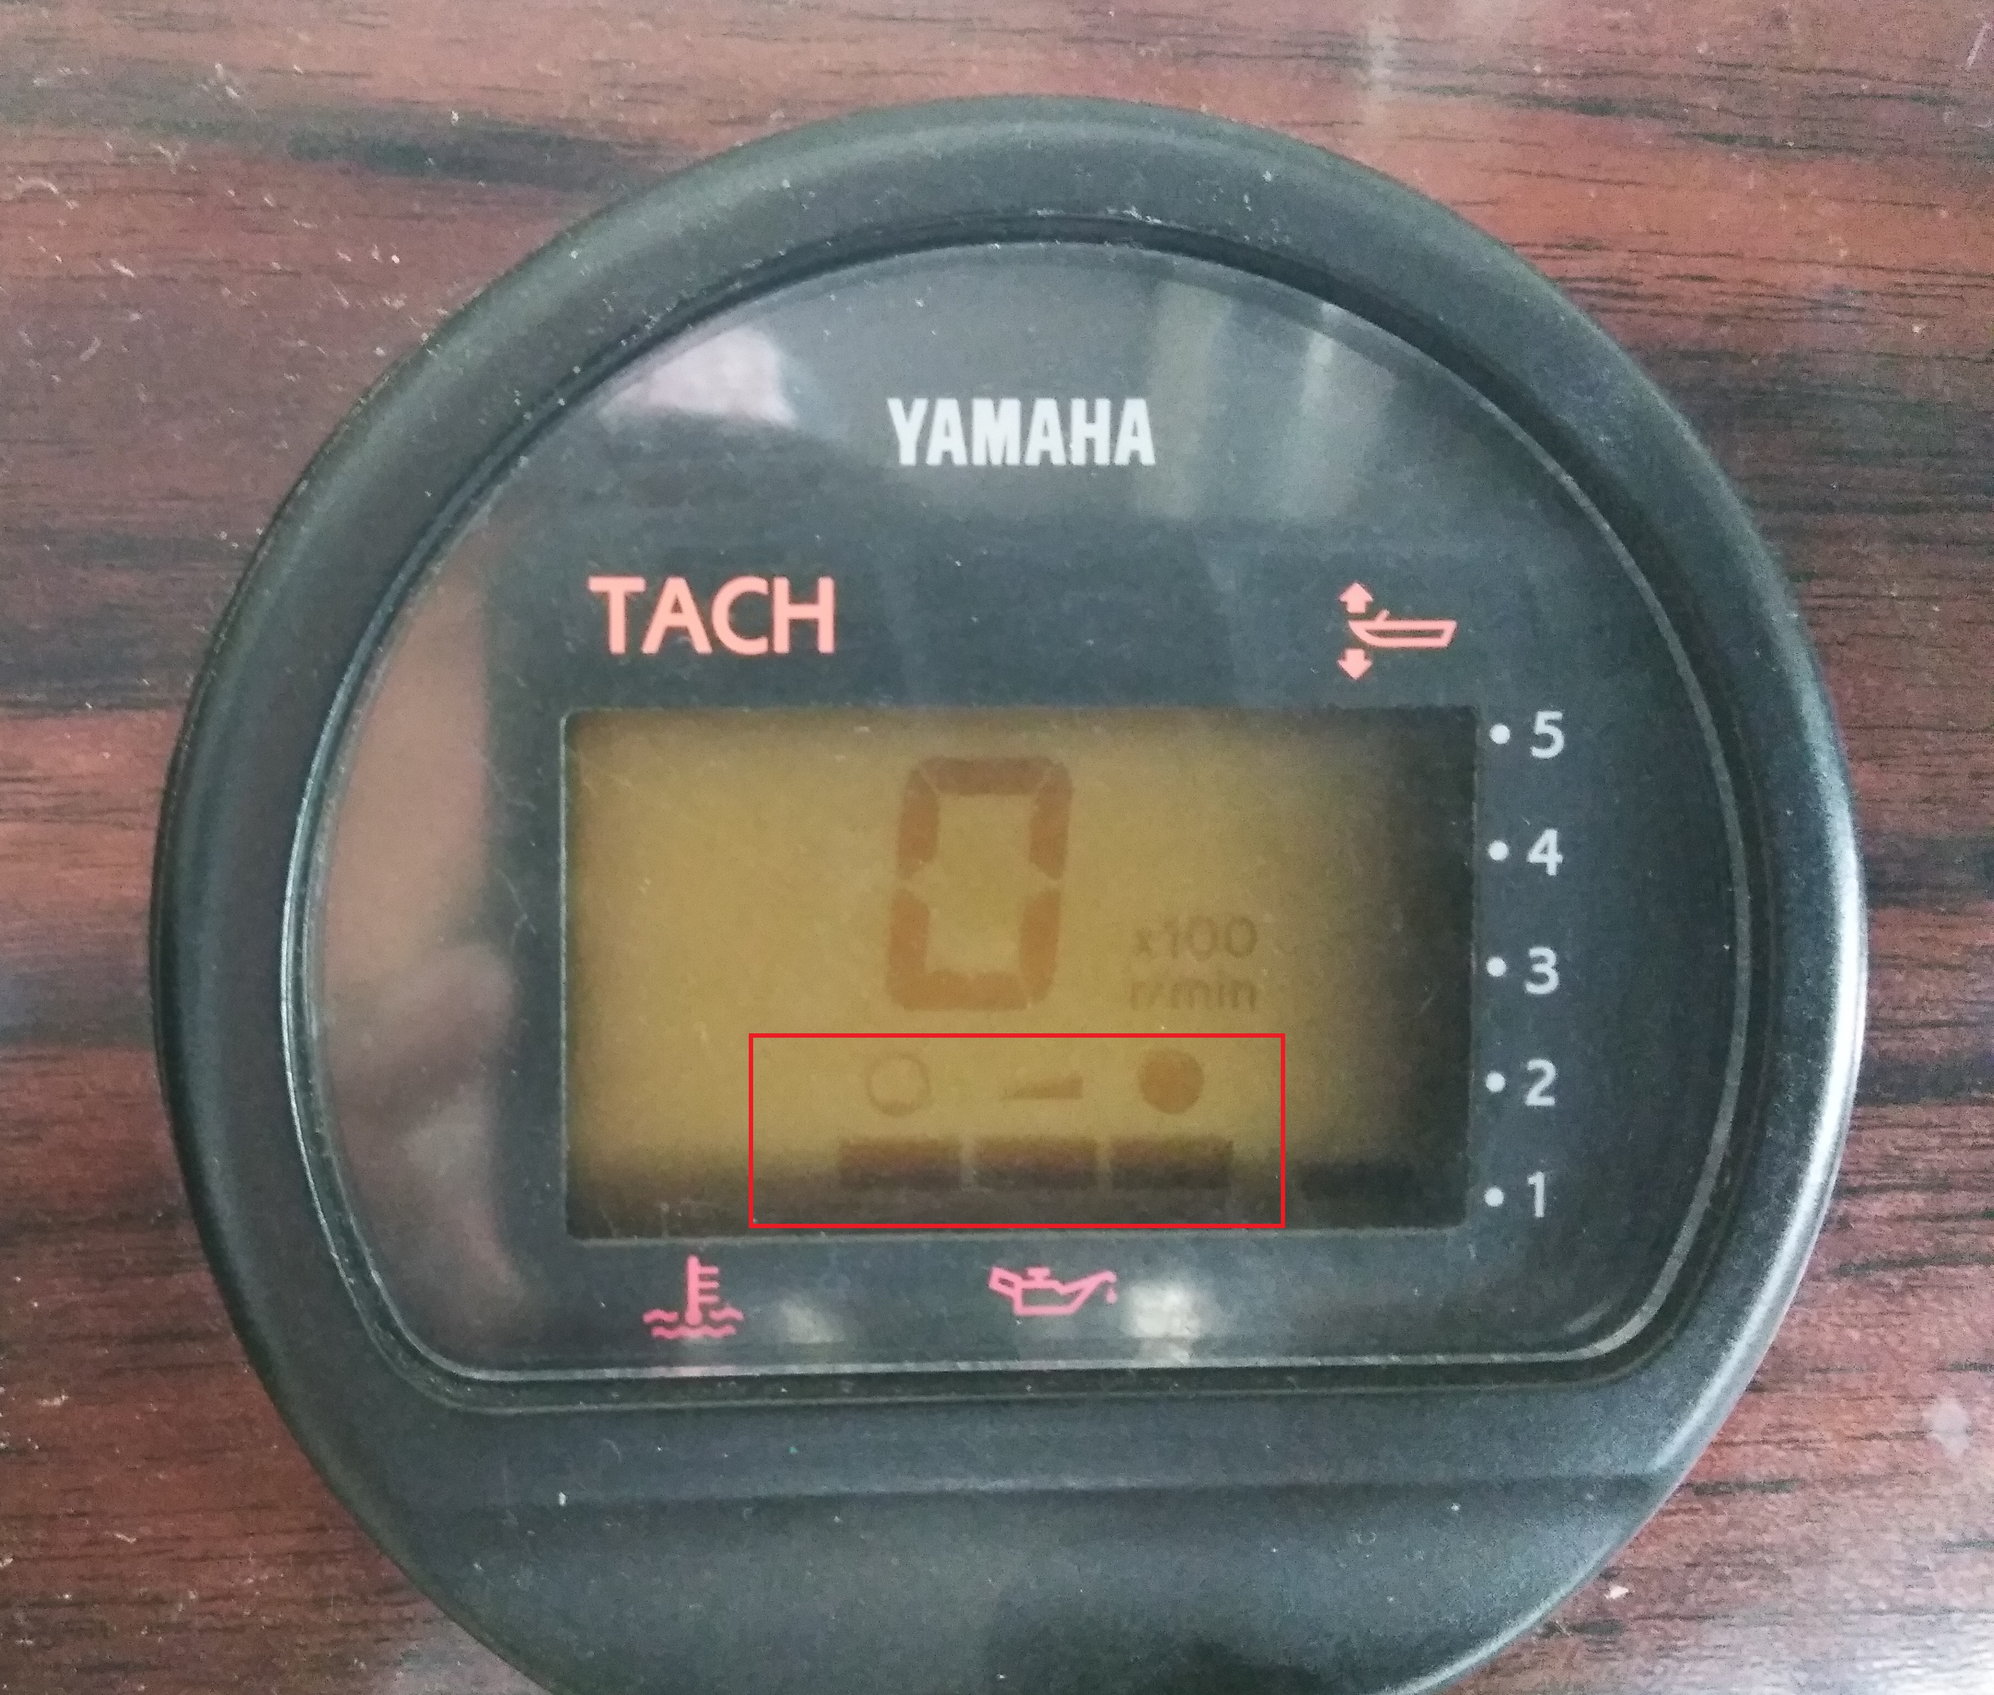 Motor tachometer outboard yamaha Boat Rigging